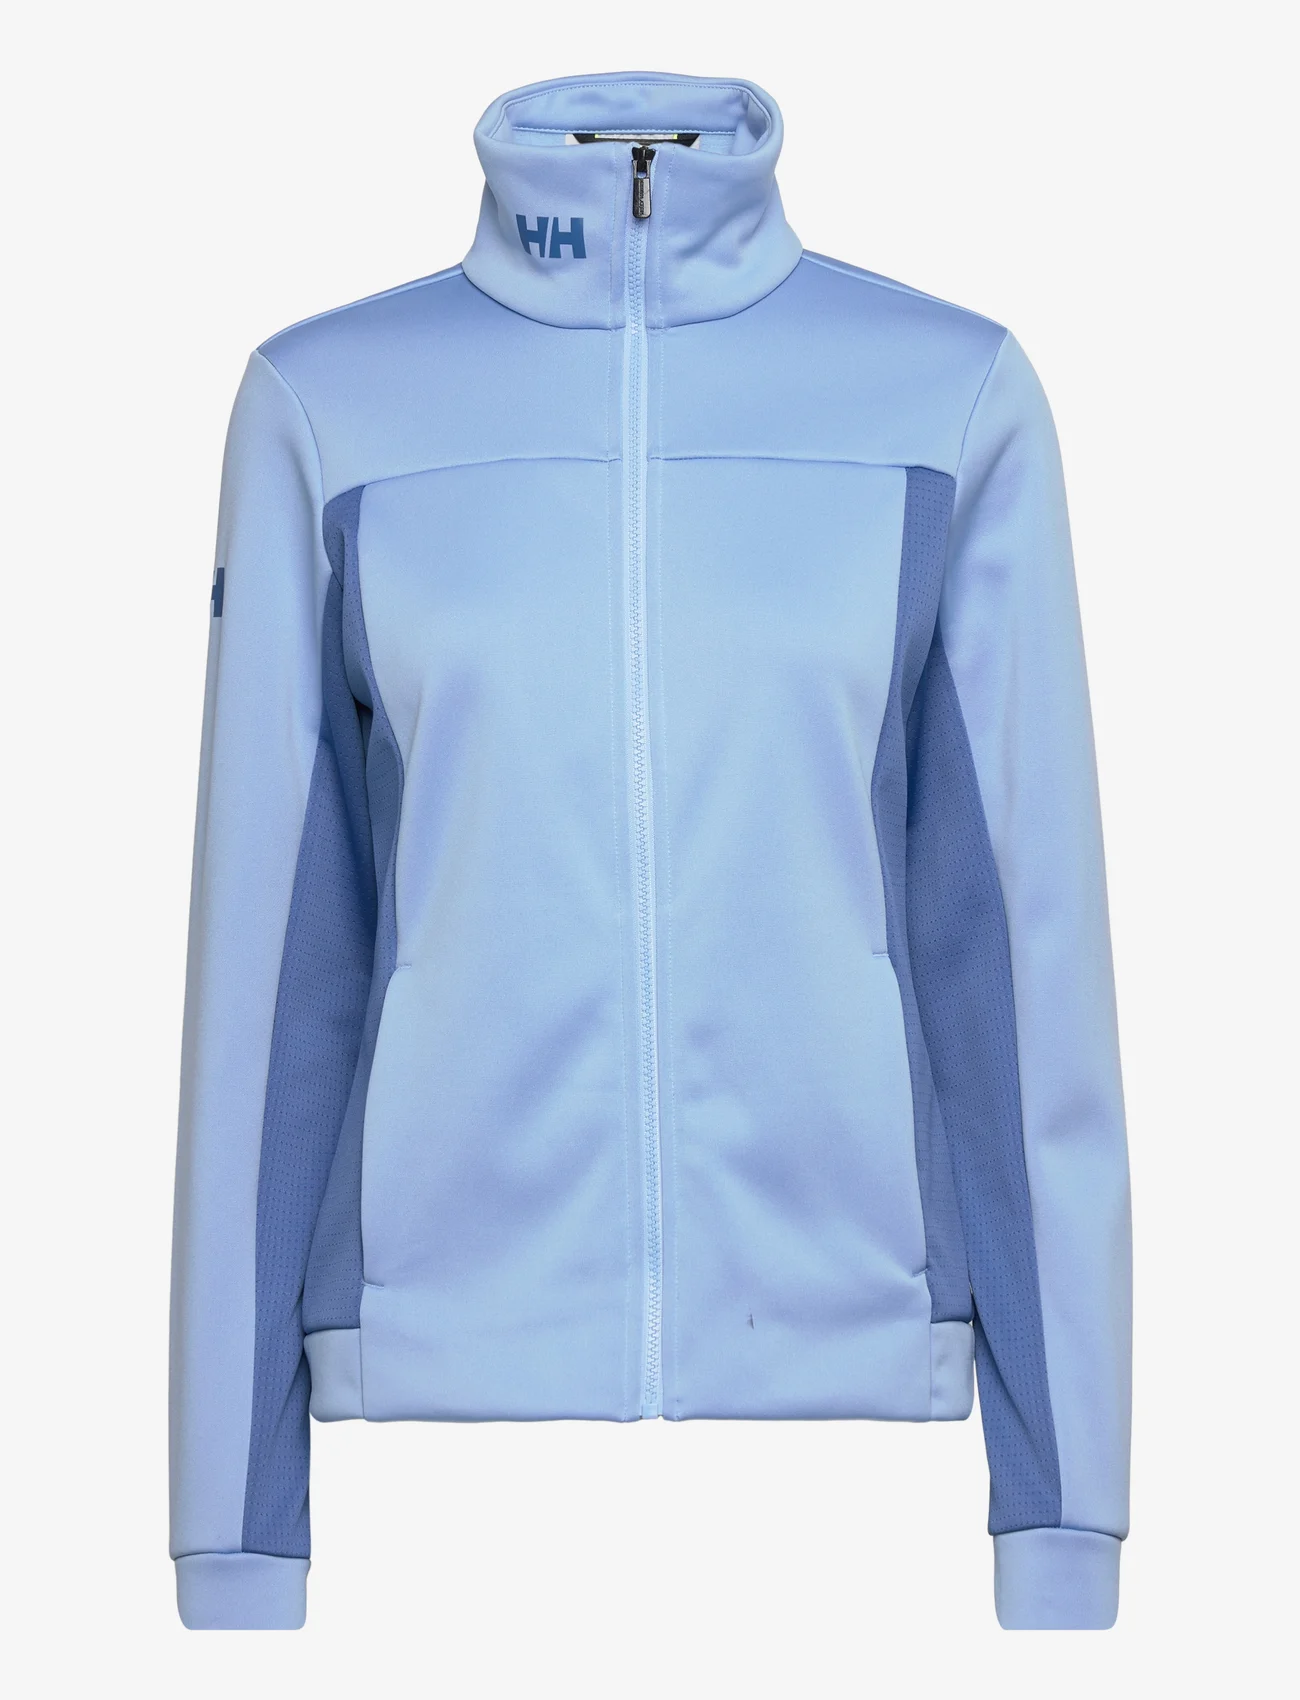 Helly Hansen - W CREW FLEECE JACKET - outdoor & rain jackets - bright blue - 0